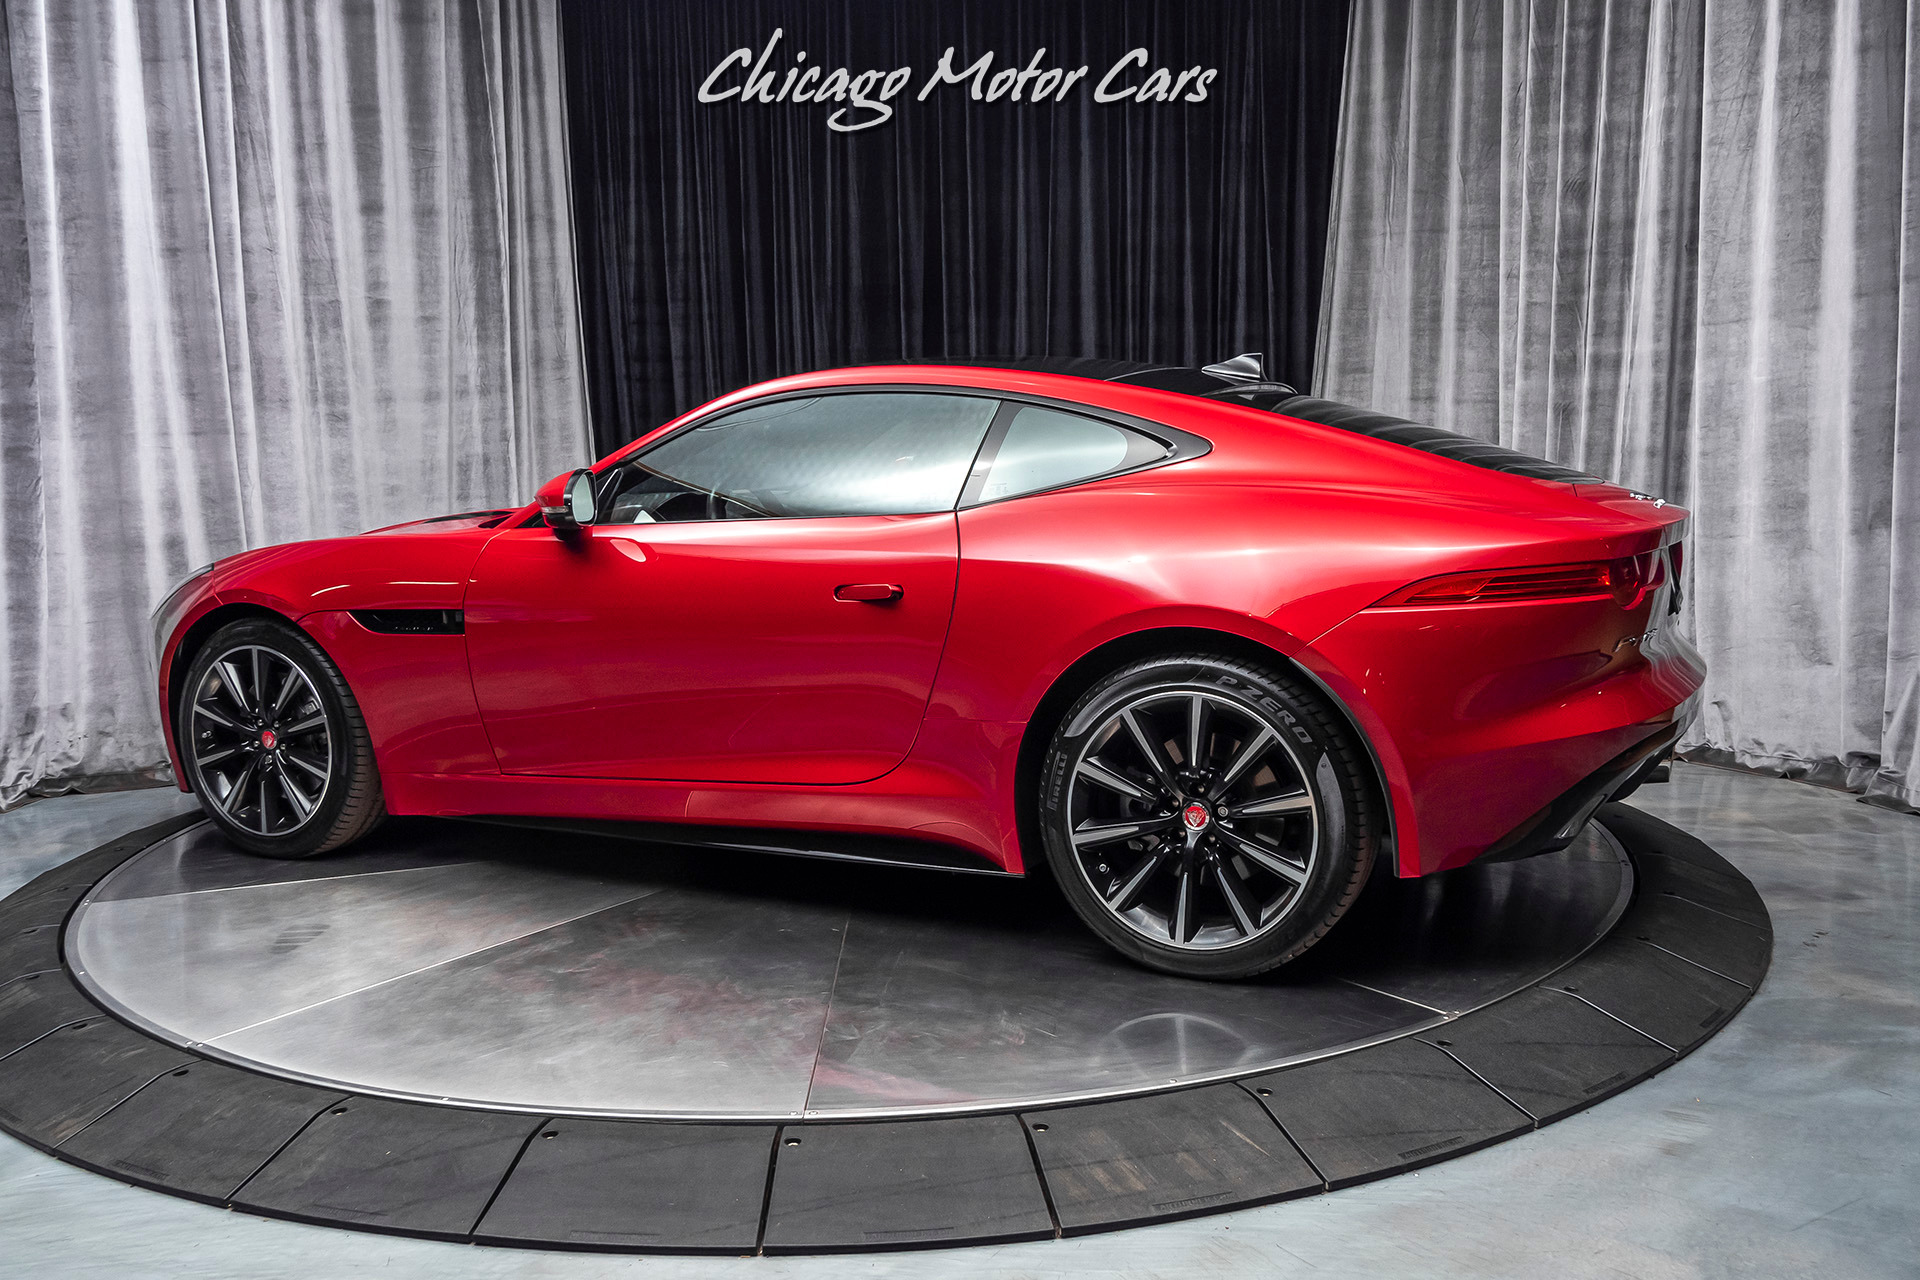 Used-2017-Jaguar-F-TYPE-Premium-VISION-PKG-Only-22K-Miles-ITALIAN-RACING-RED